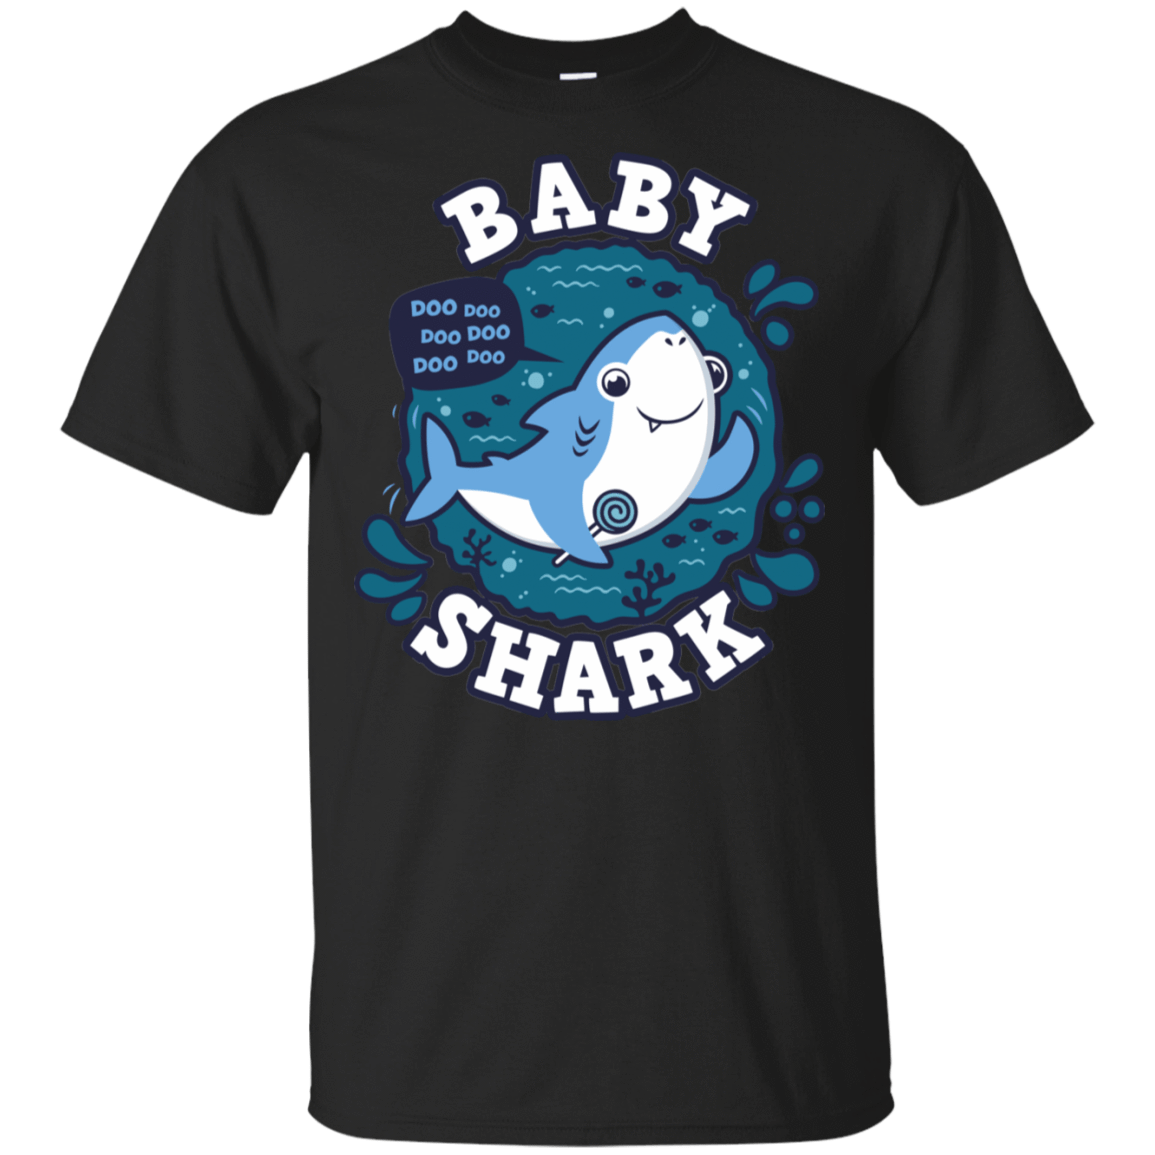 T-Shirts Black / S Shark Family trazo - Baby Boy T-Shirt